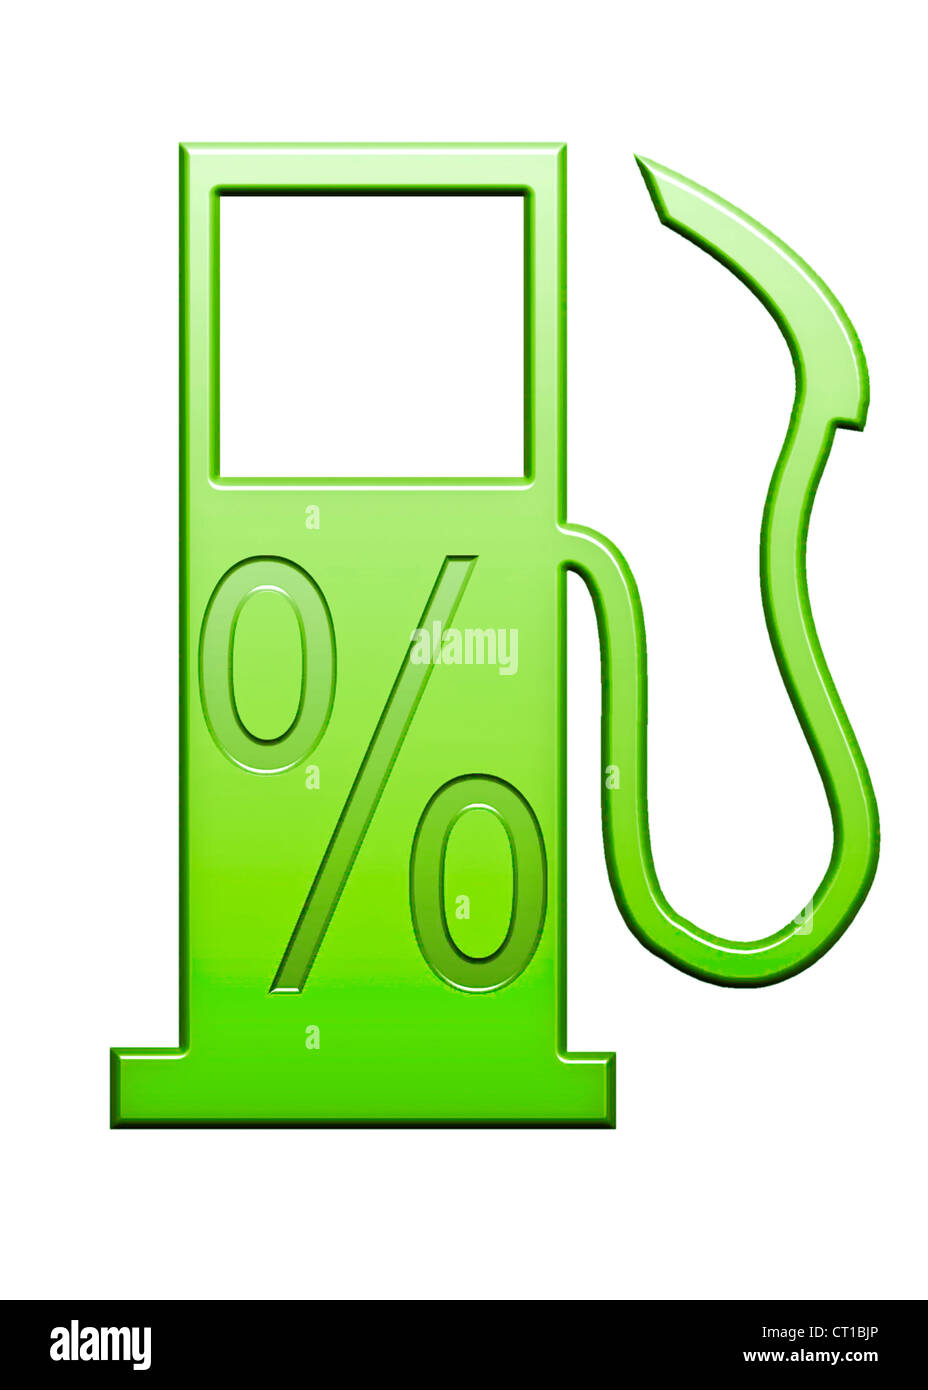 percentage sign on a symbolic gas pump Stock Photo